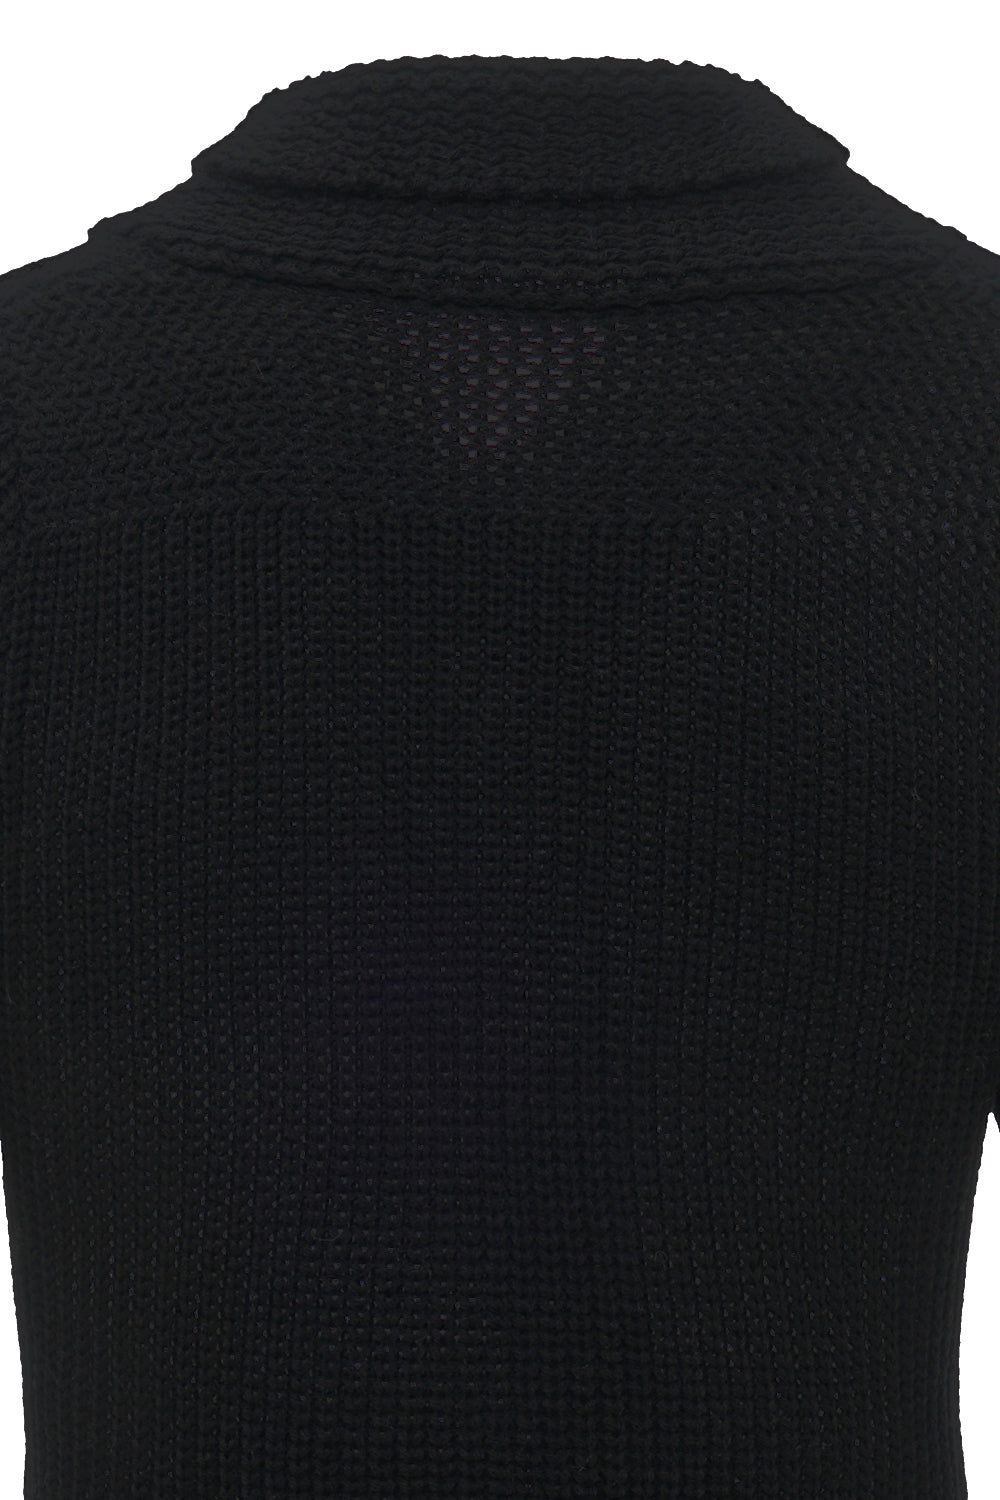 Black Long Sleeves Pullover Men's Sweater